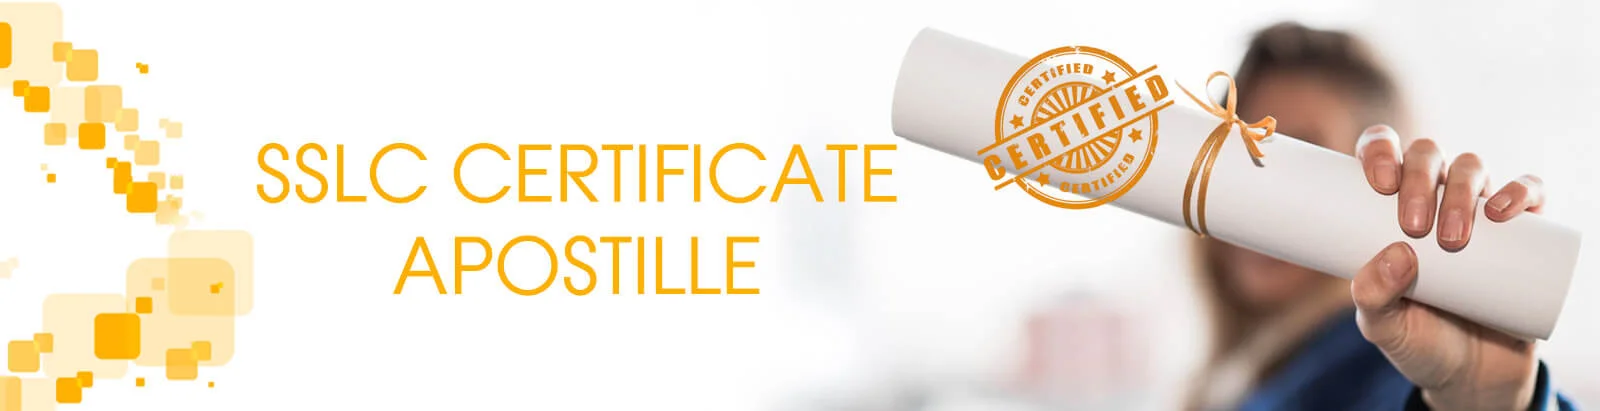 sslc-certificate-apostille